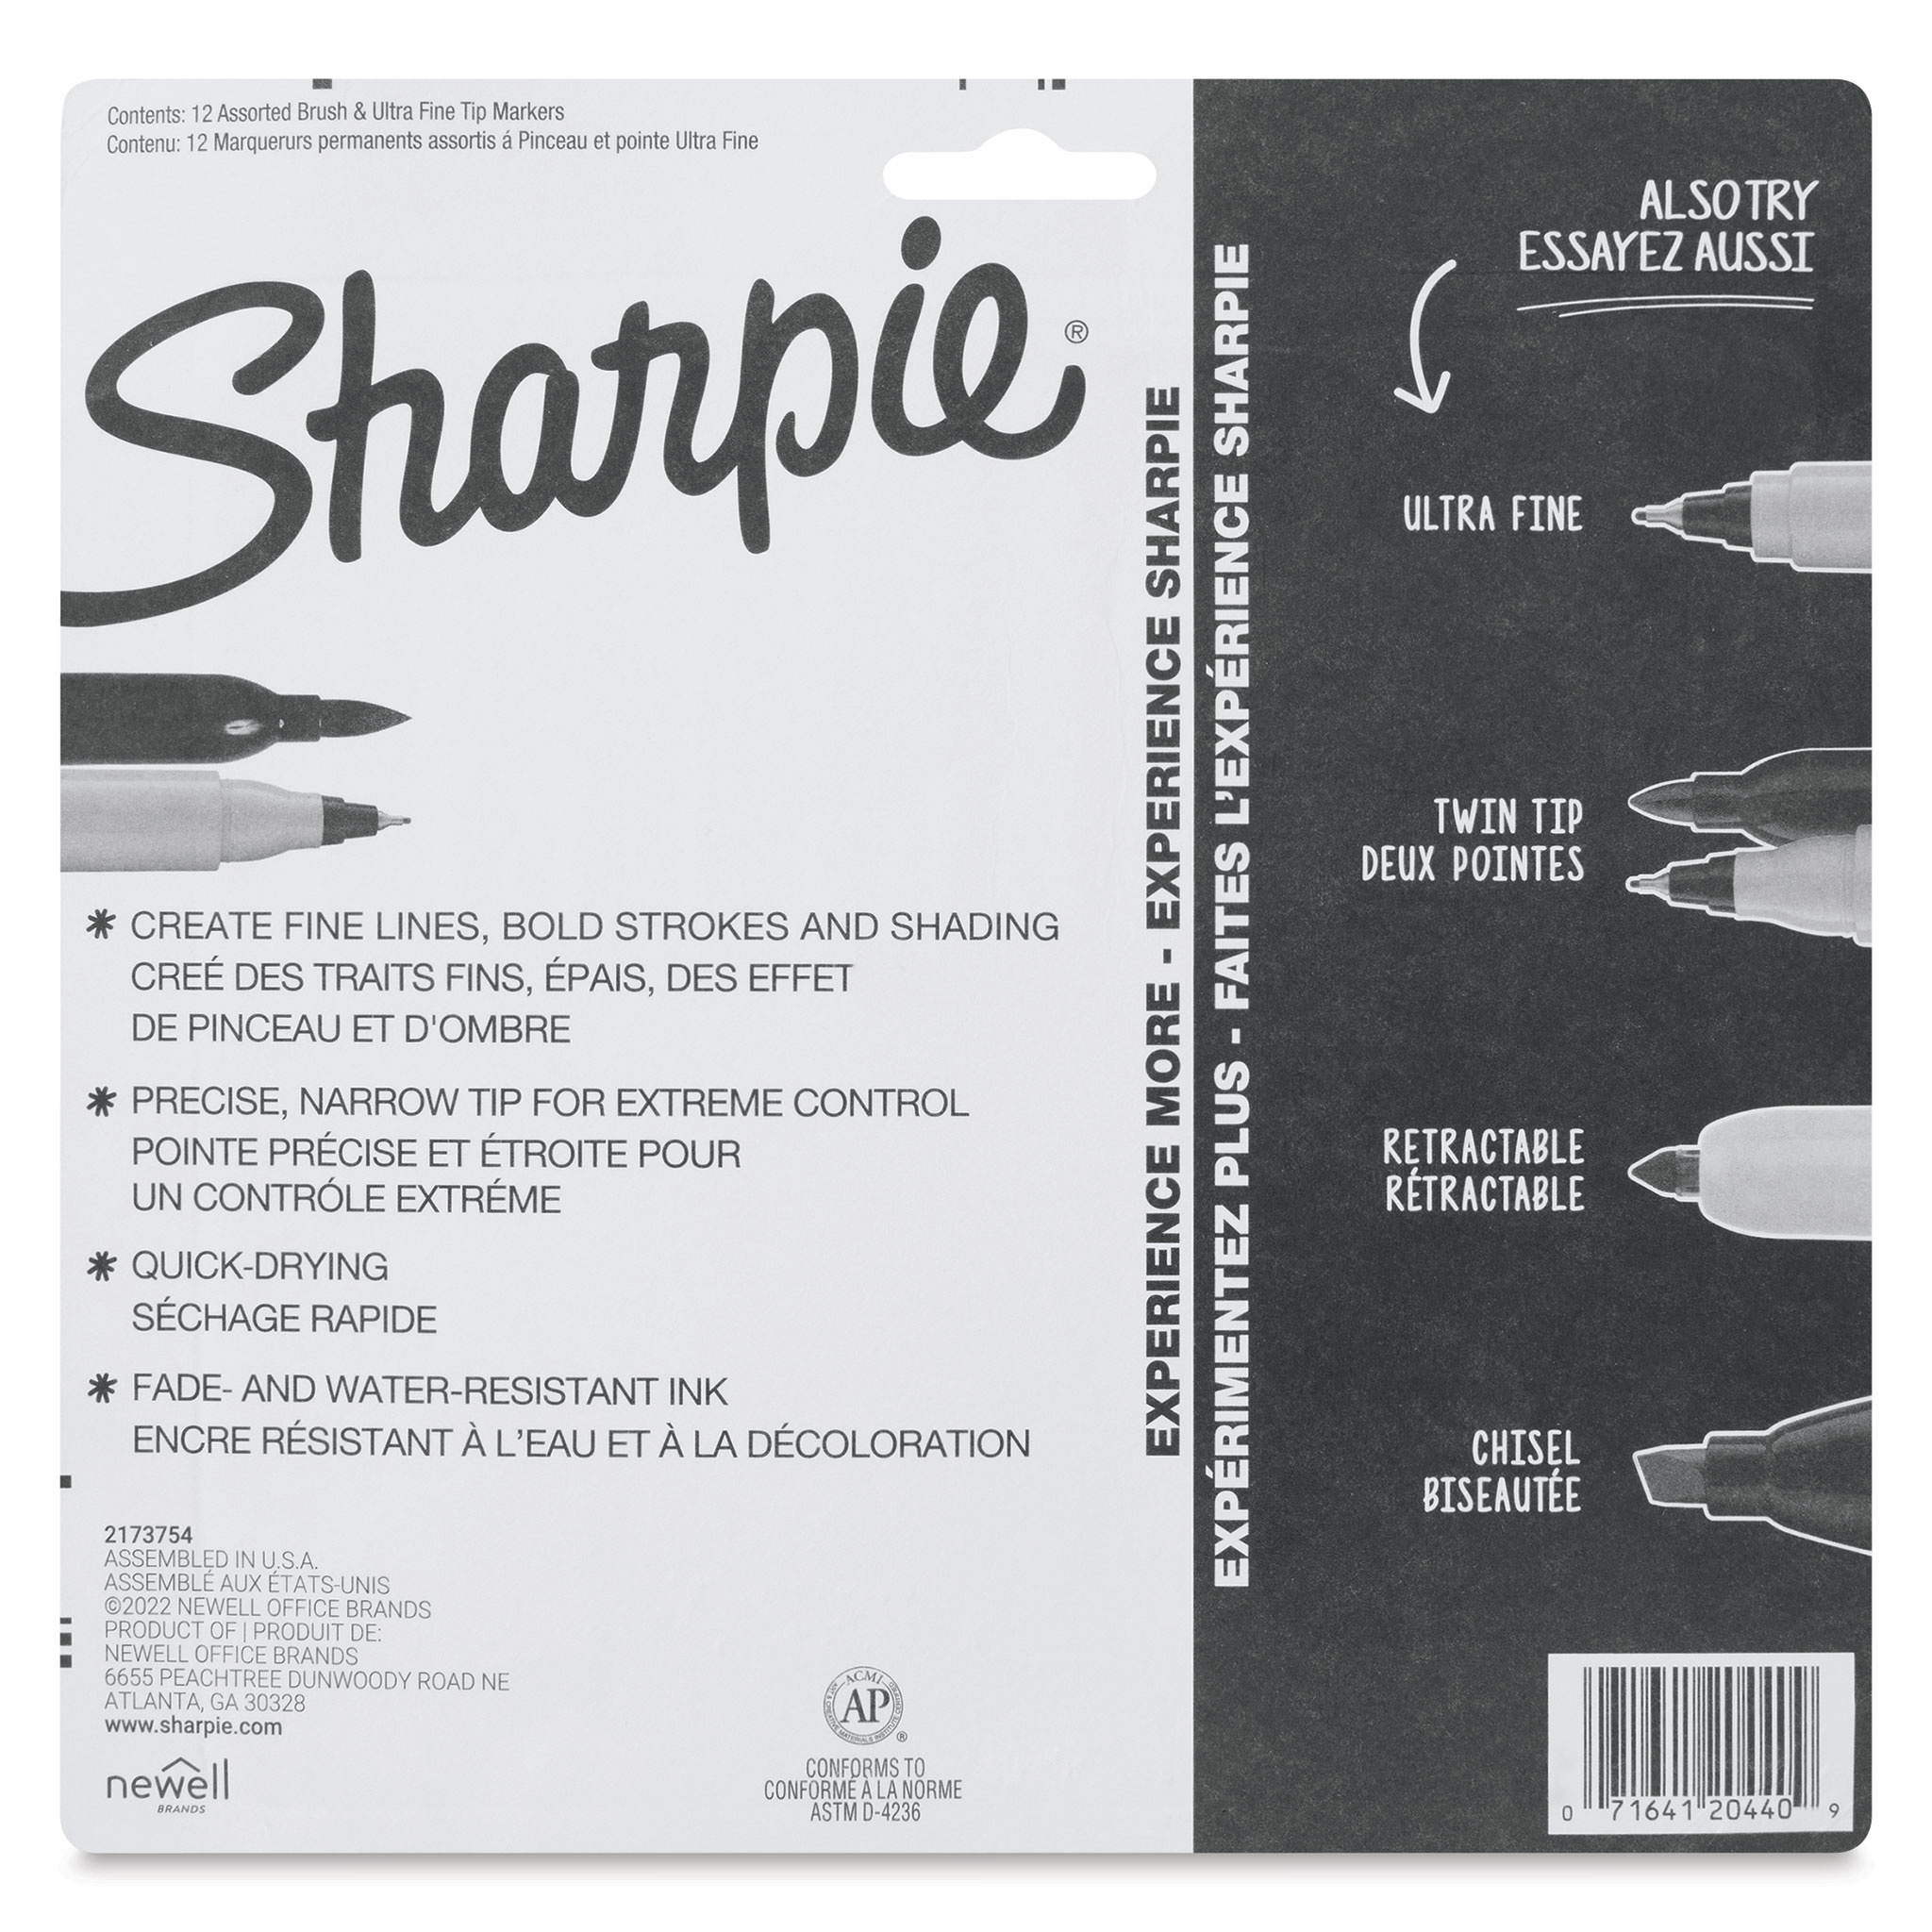 Sharpie Brush Twin Tip Markers - 12 Piece Set